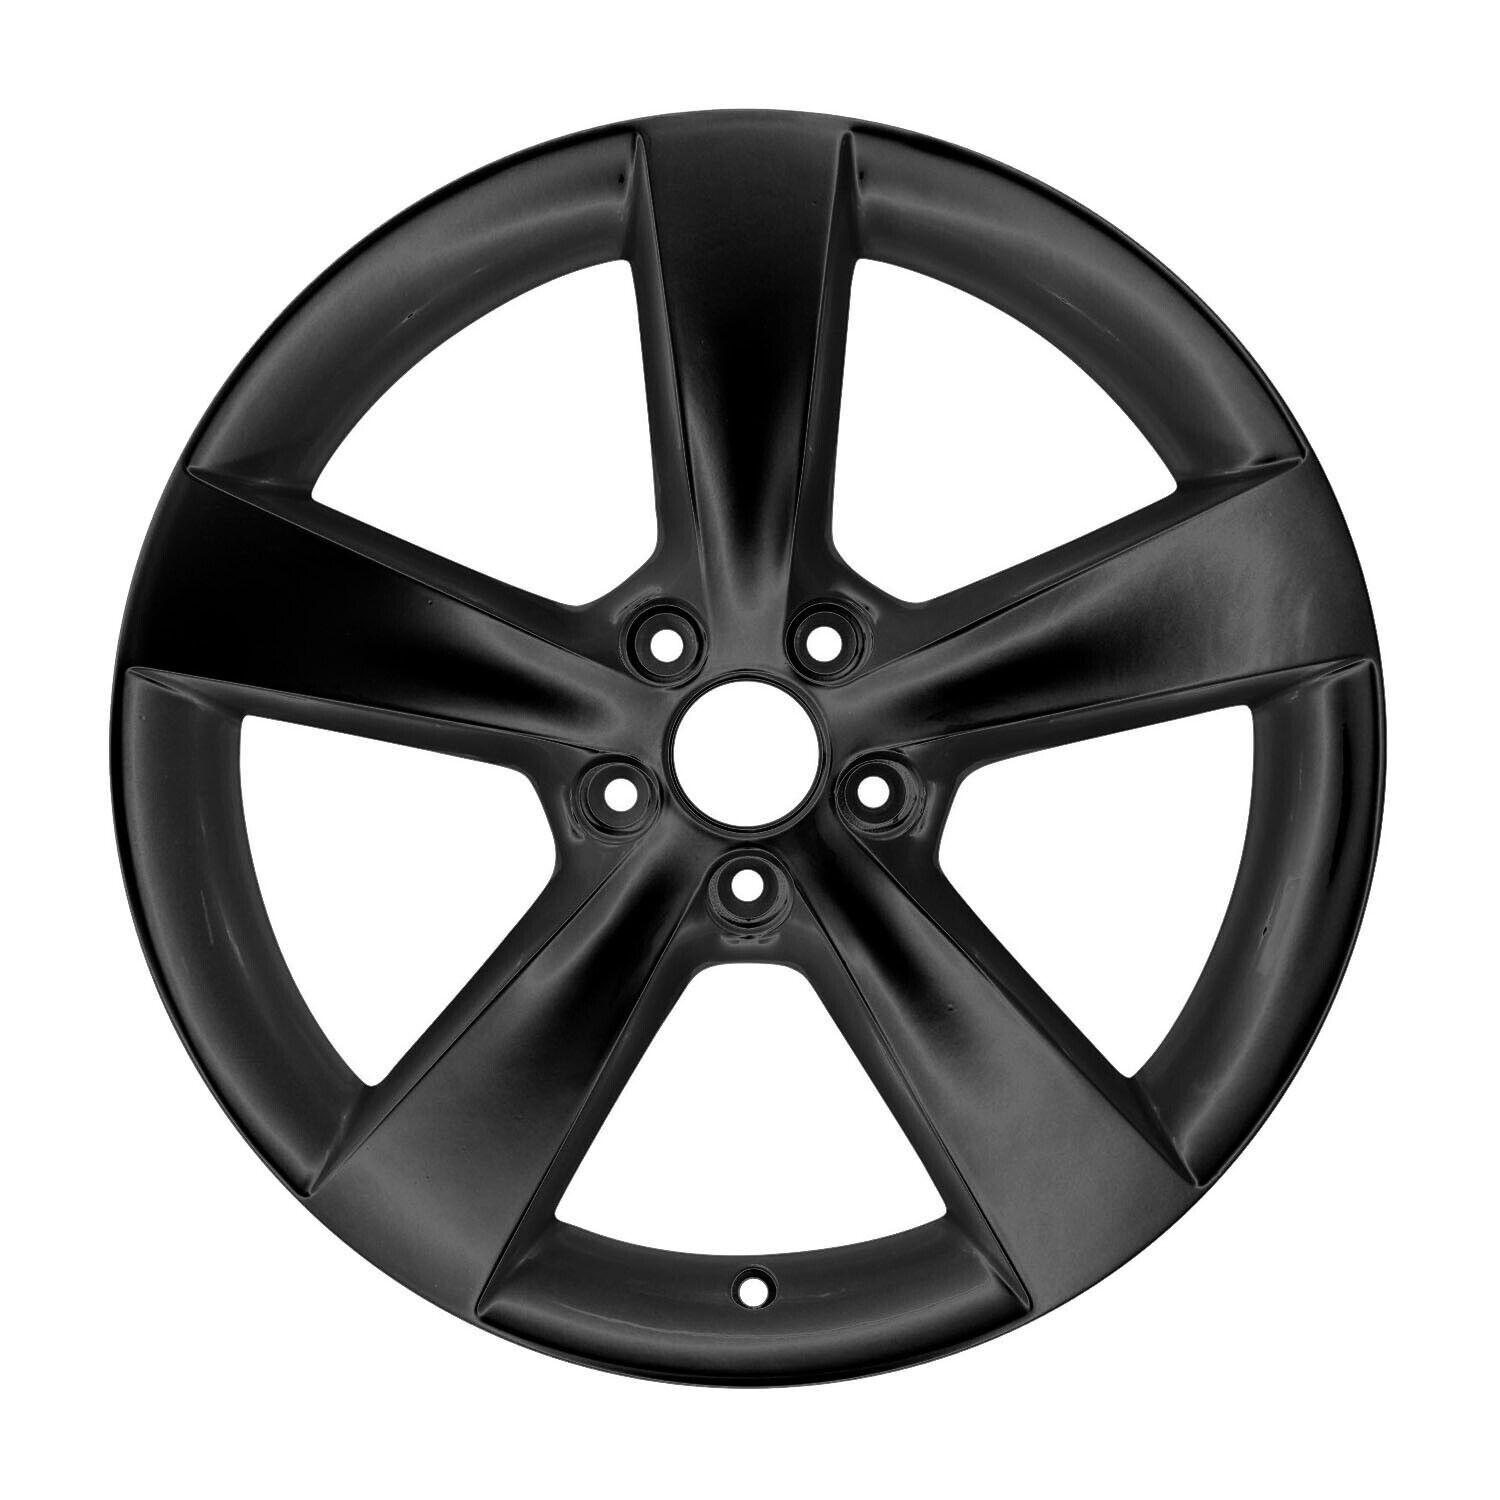 02479 Reconditioned OEM Aluminum Wheel 18x7.5 fits 2013-2016 Dodge Dart